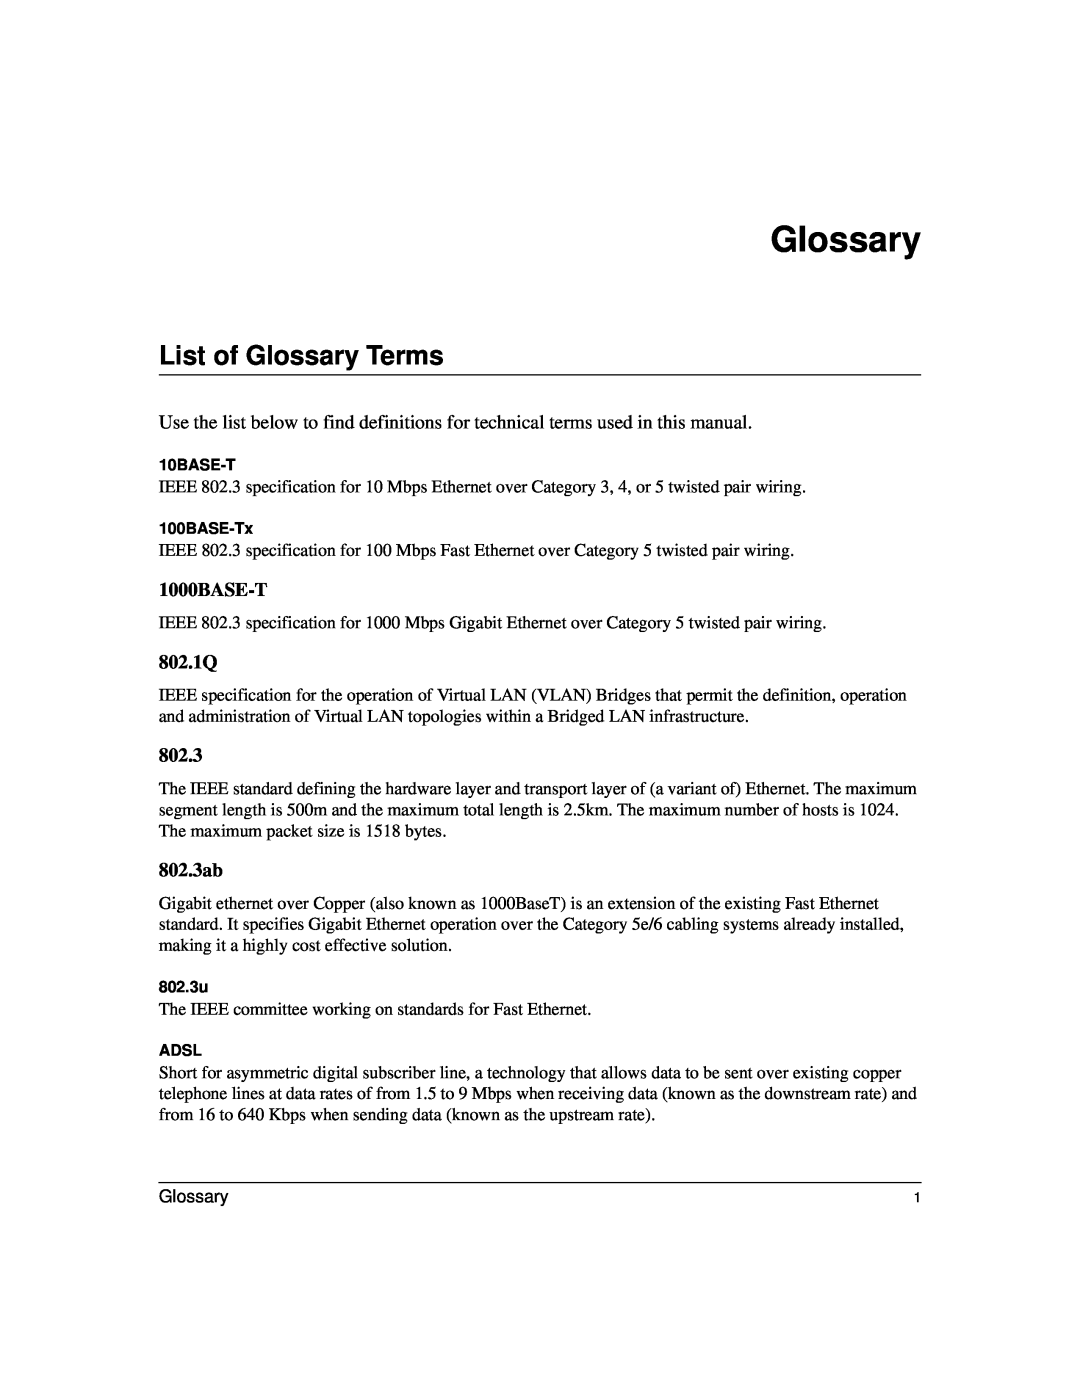 NETGEAR WGE111 user manual List of Glossary Terms, 1000BASE-T, 802.1Q, 802.3ab 